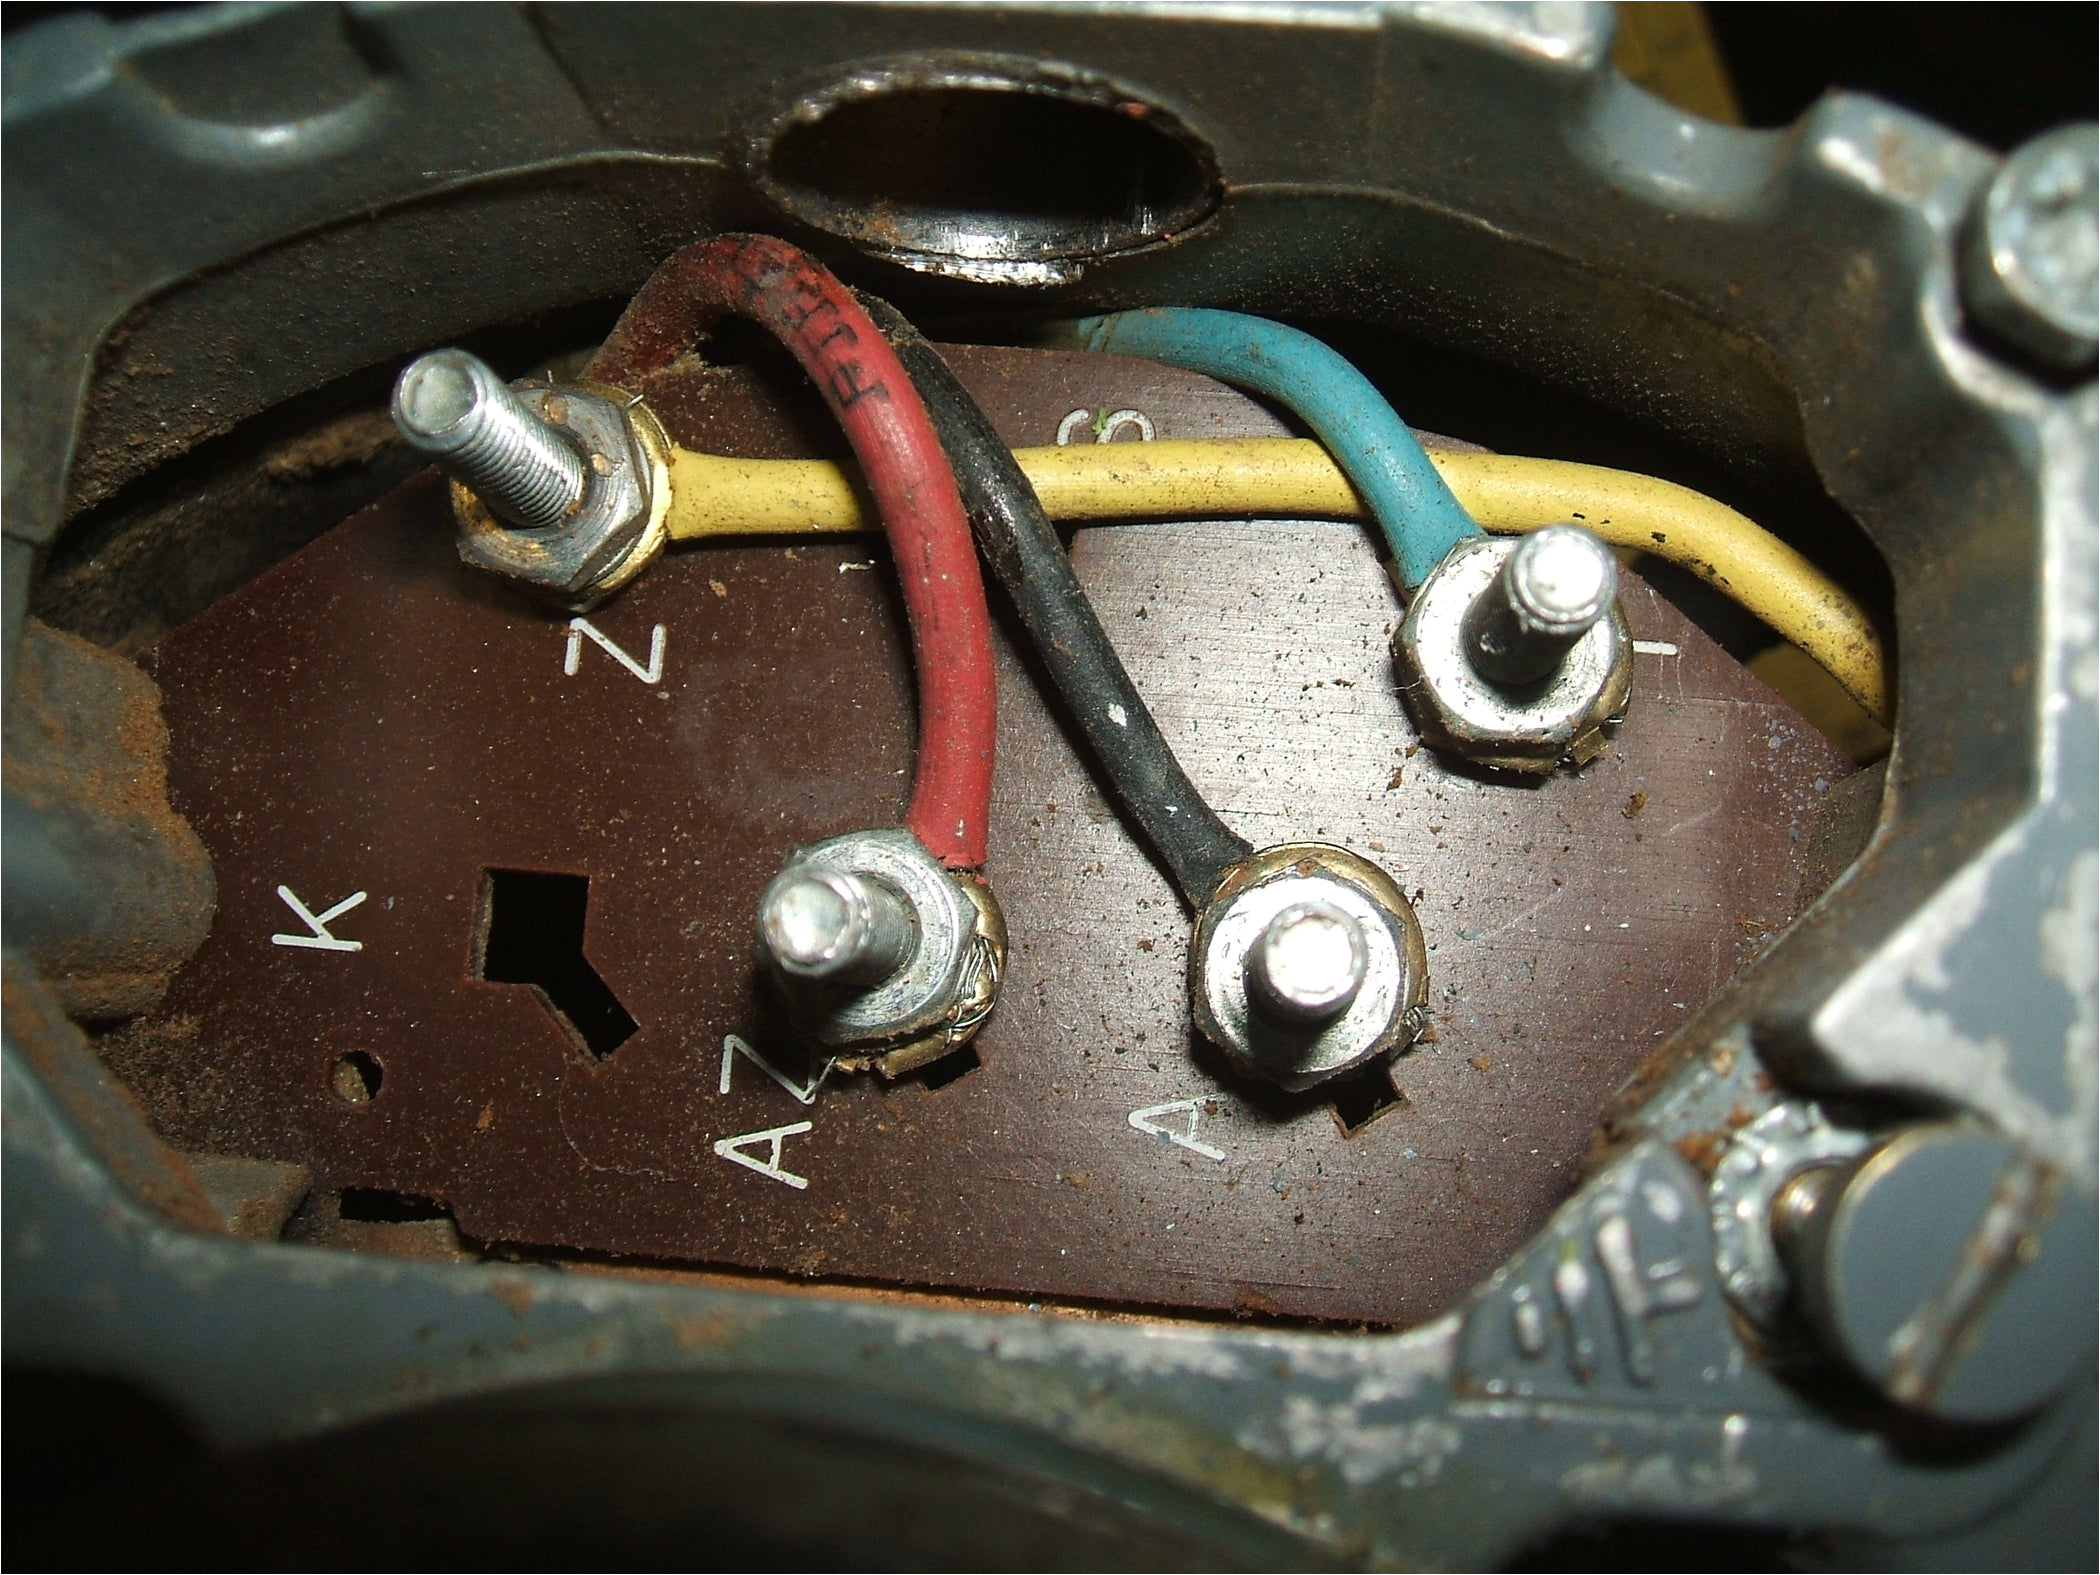 wiring up a brooke crompton single phase lathe motor myford lathe